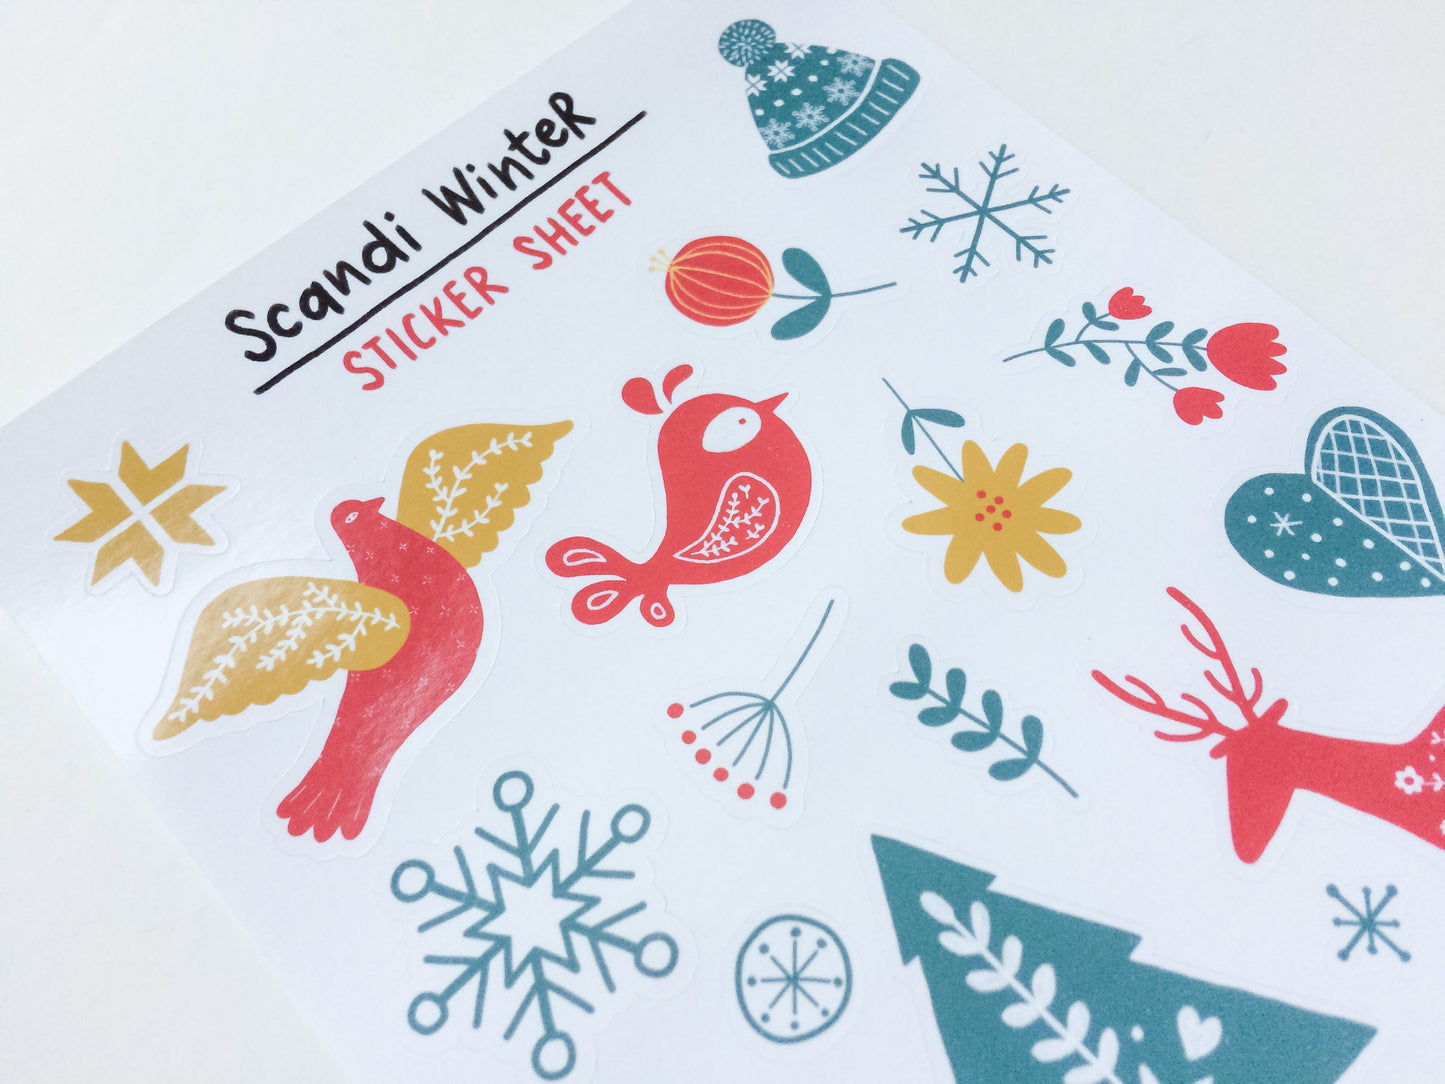 Scandi Winter, Christmas Sticker Sheet, Christmas Stickers, A6 Sticker sheet